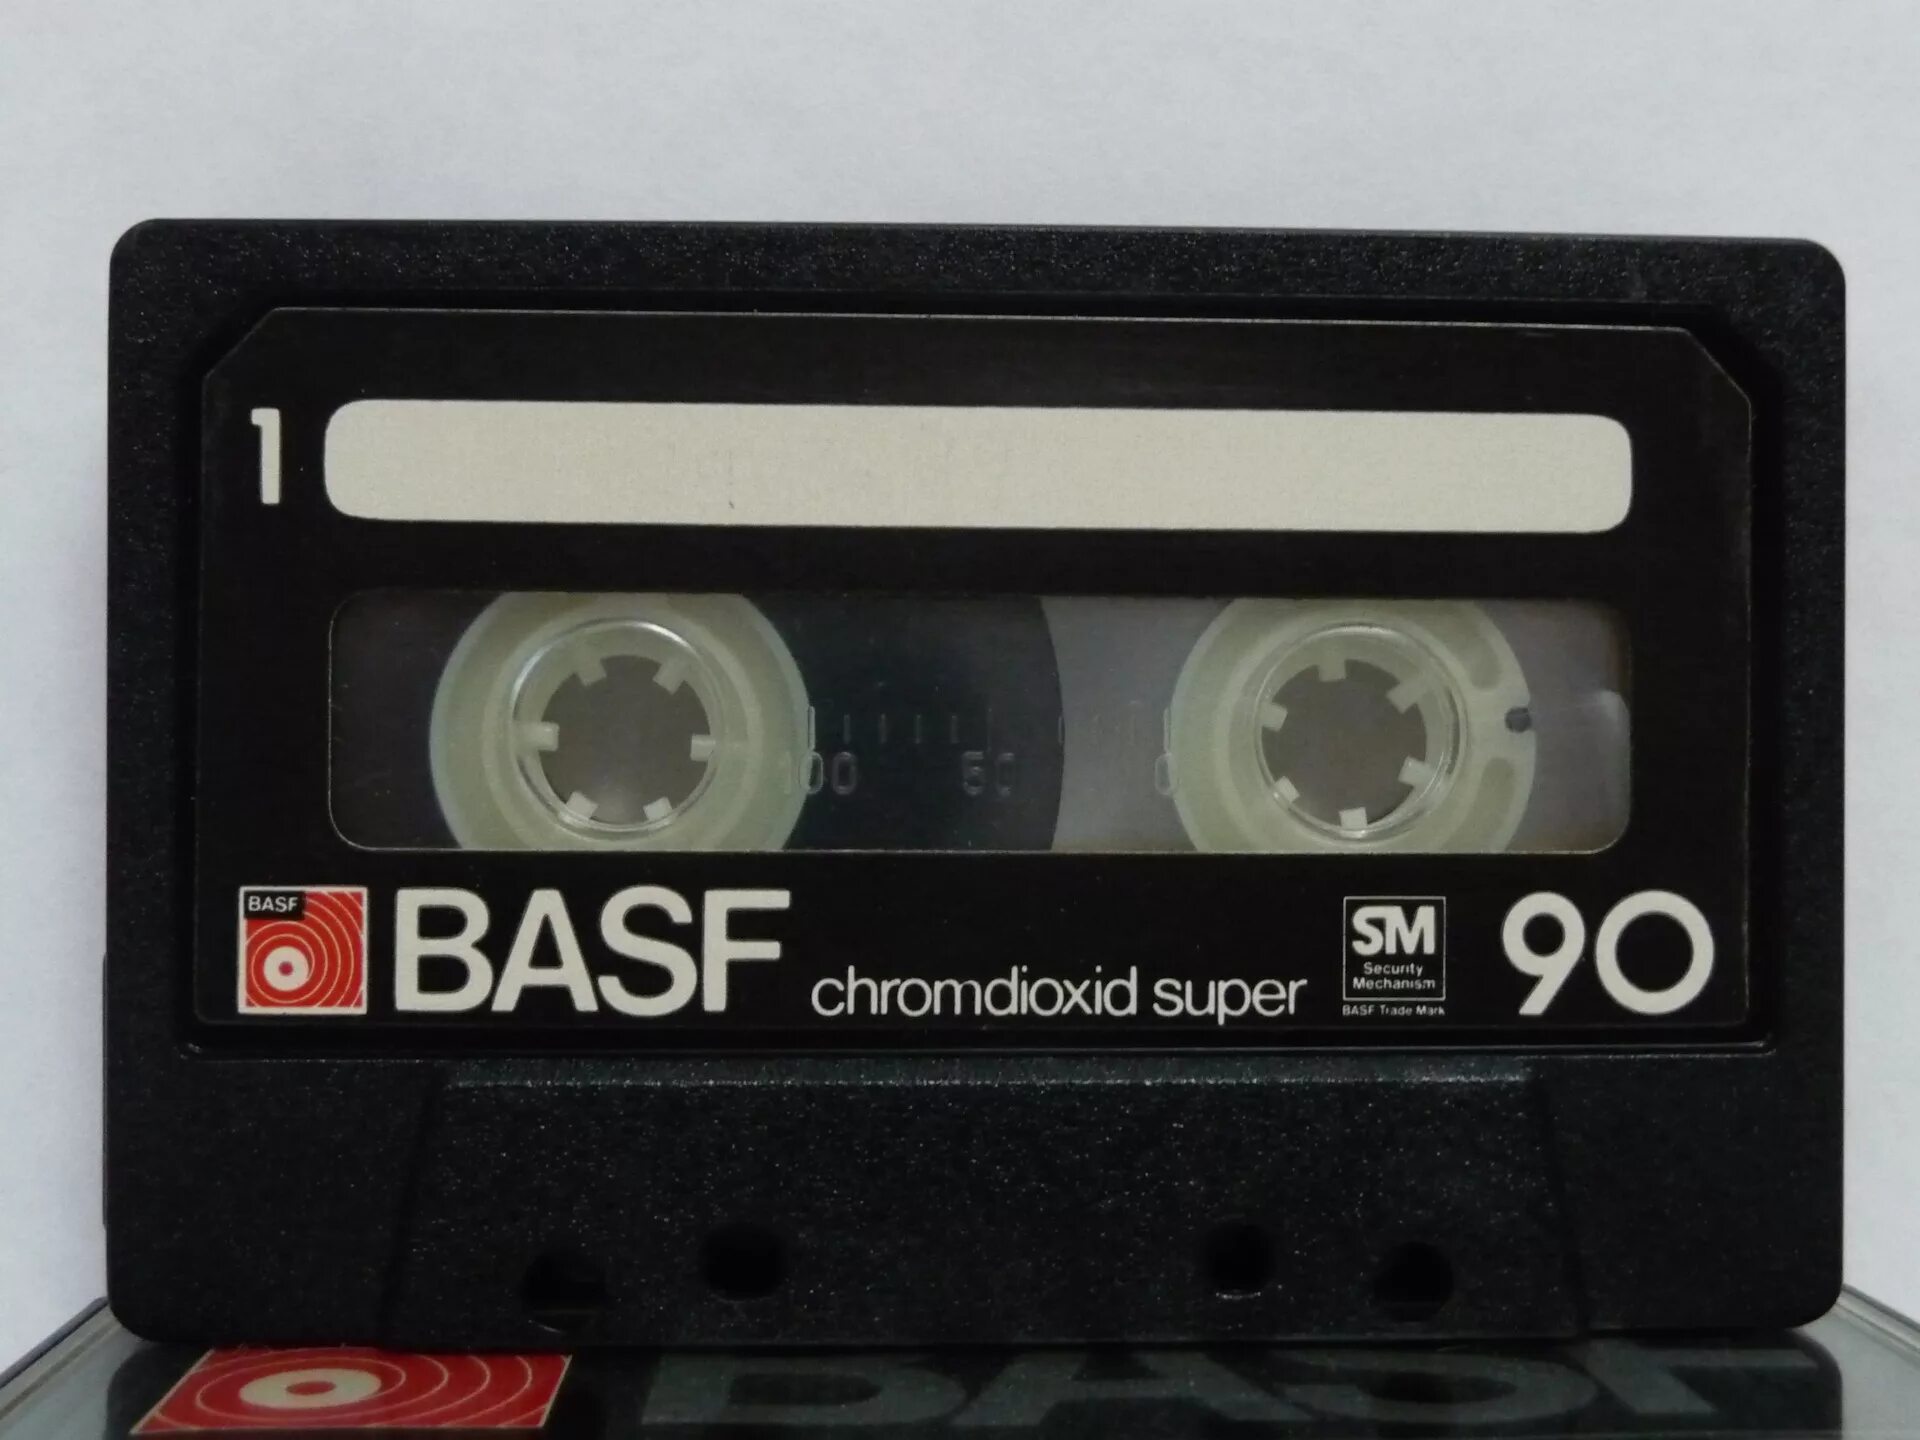 Радио забытая кассета. Кассеты БАСФ для магнитофона. Кассета BASF 120. Compact Cassette BASF. Компакт кассета BASF Color Sound.